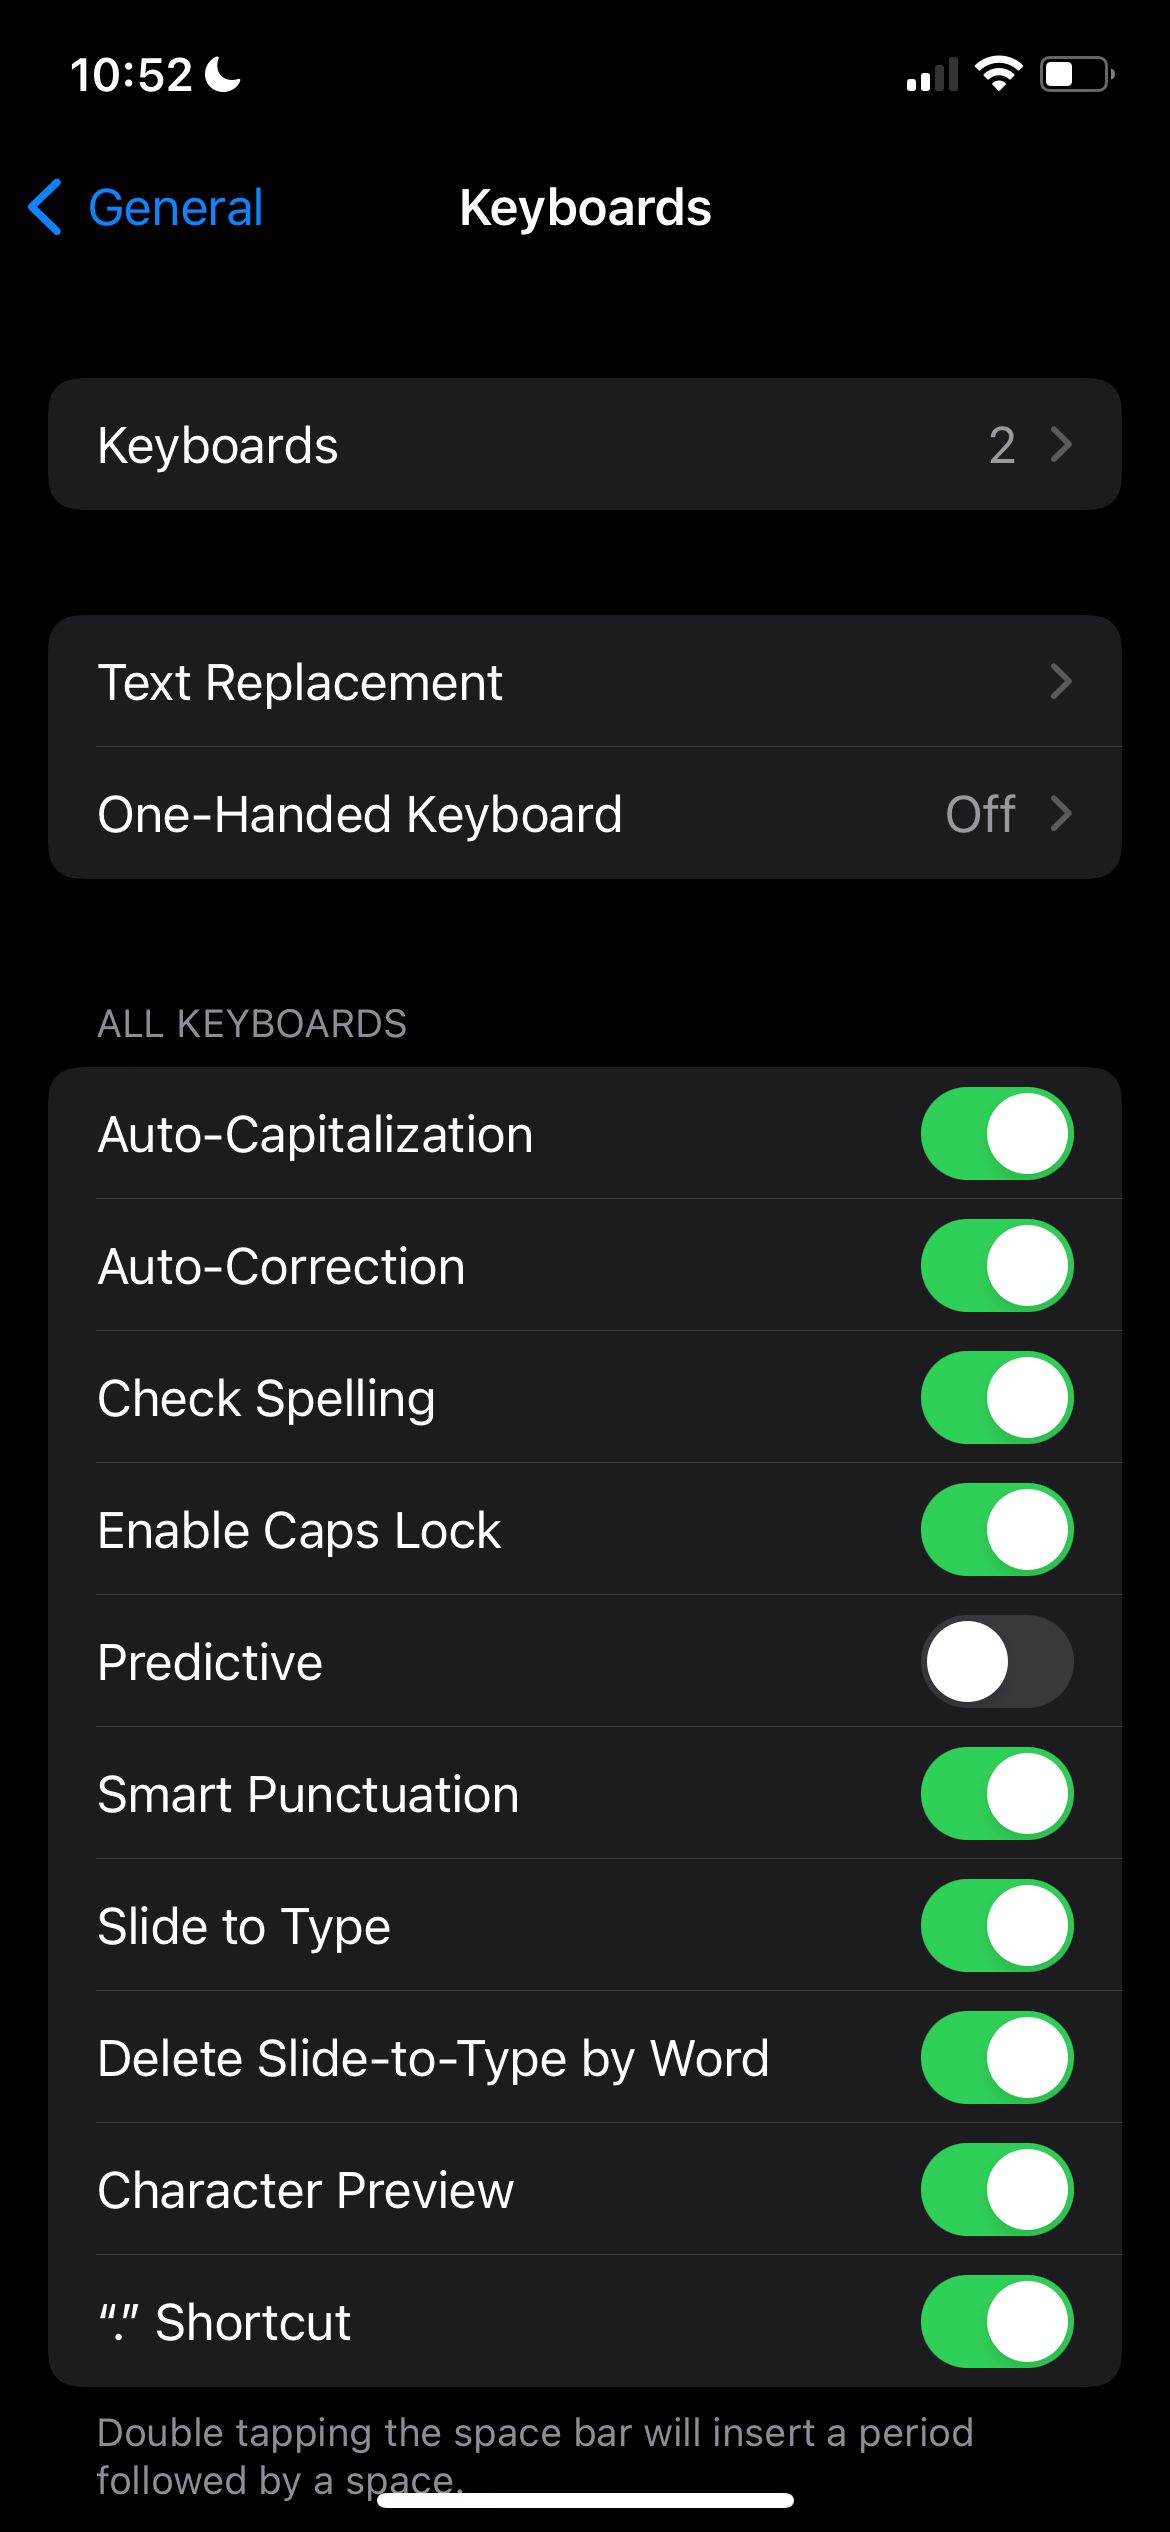 Keyboards settings on iPhone